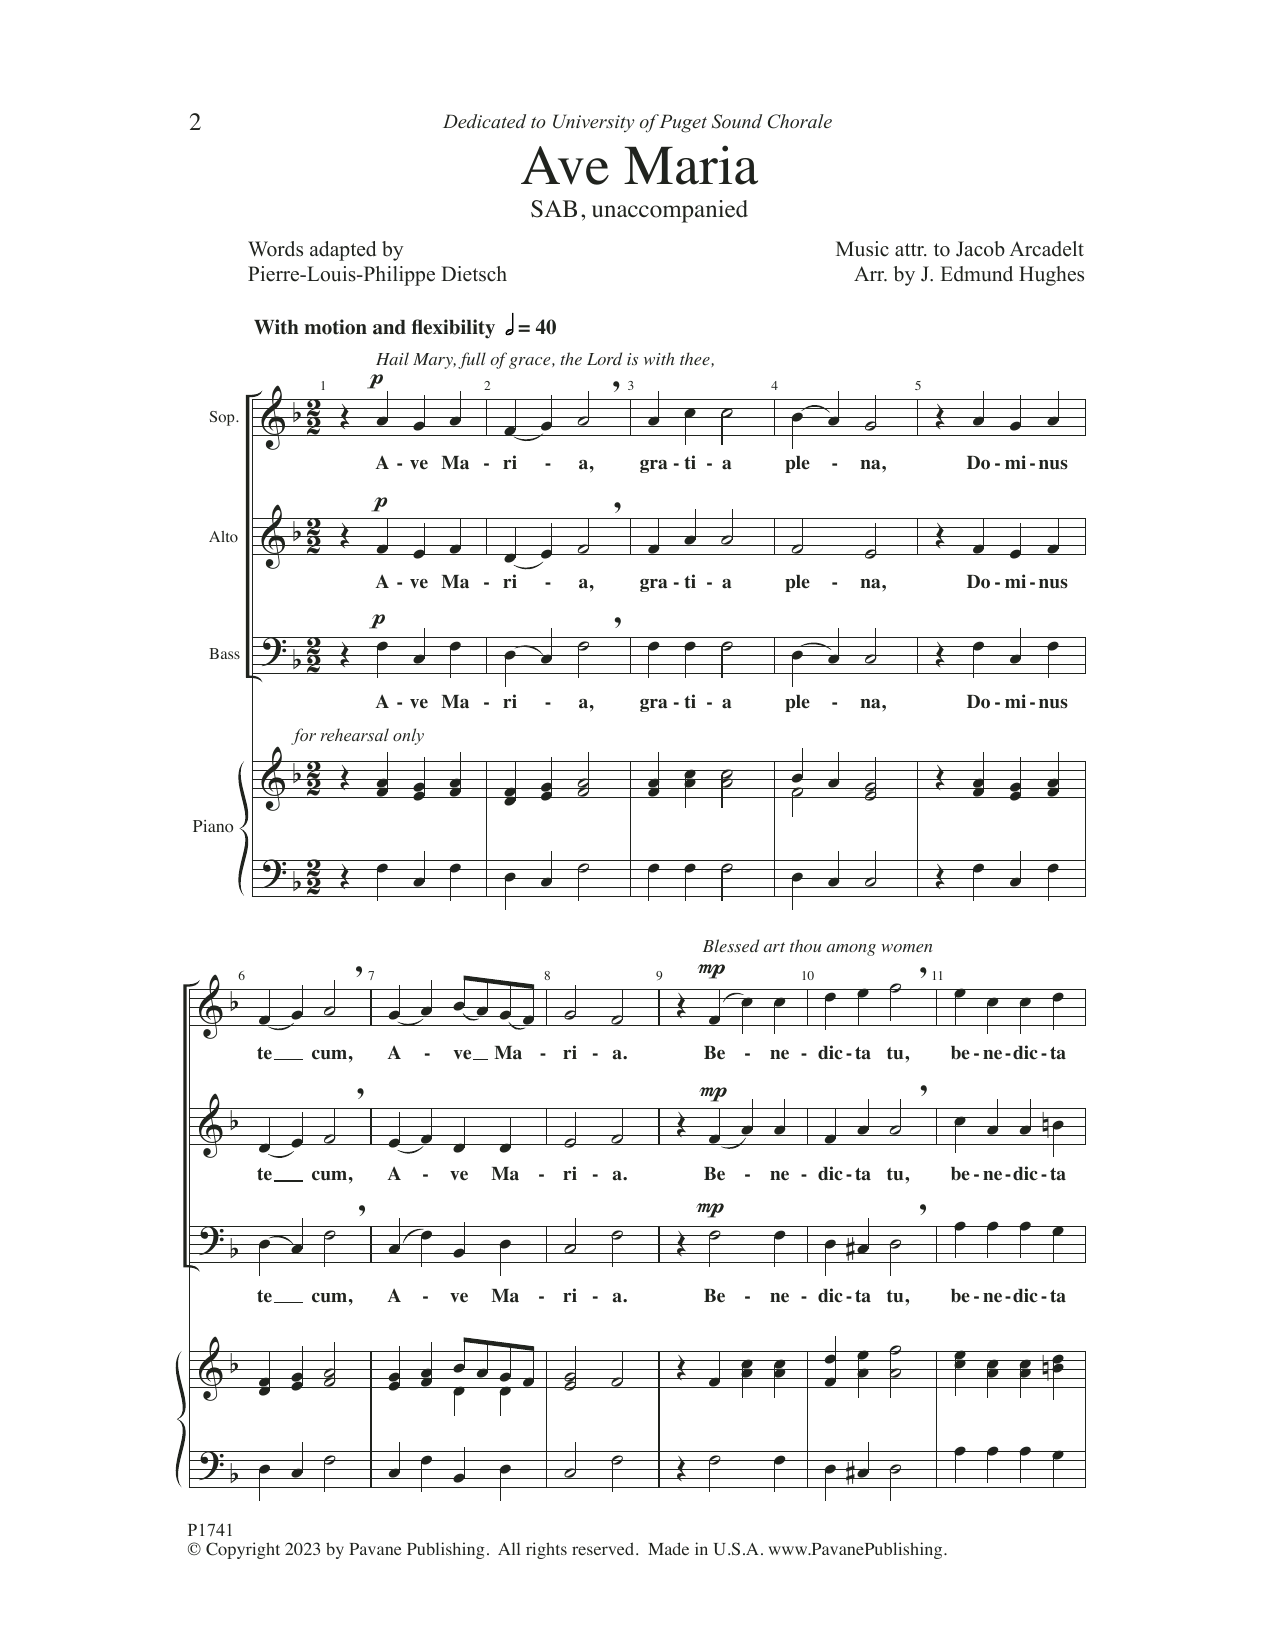 J. Edmund Hughes Ave Maria Sheet Music Notes & Chords for SAB Choir - Download or Print PDF